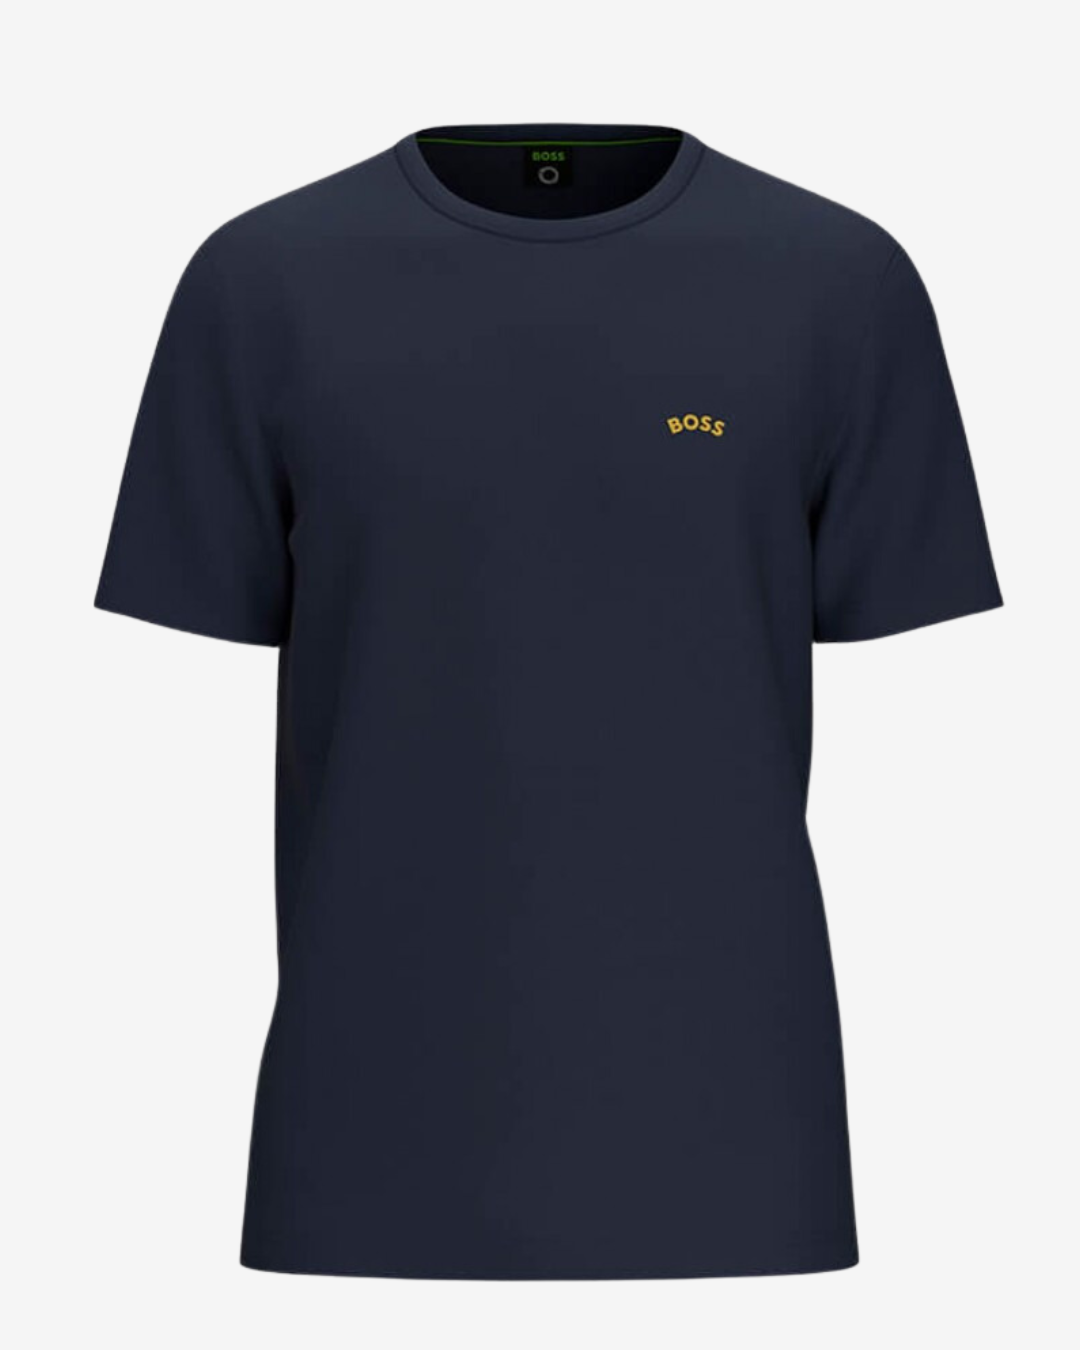 Se Hugo Boss Curved logo t-shirt - Navy / Guld - Str. XL - Modish.dk hos Modish.dk